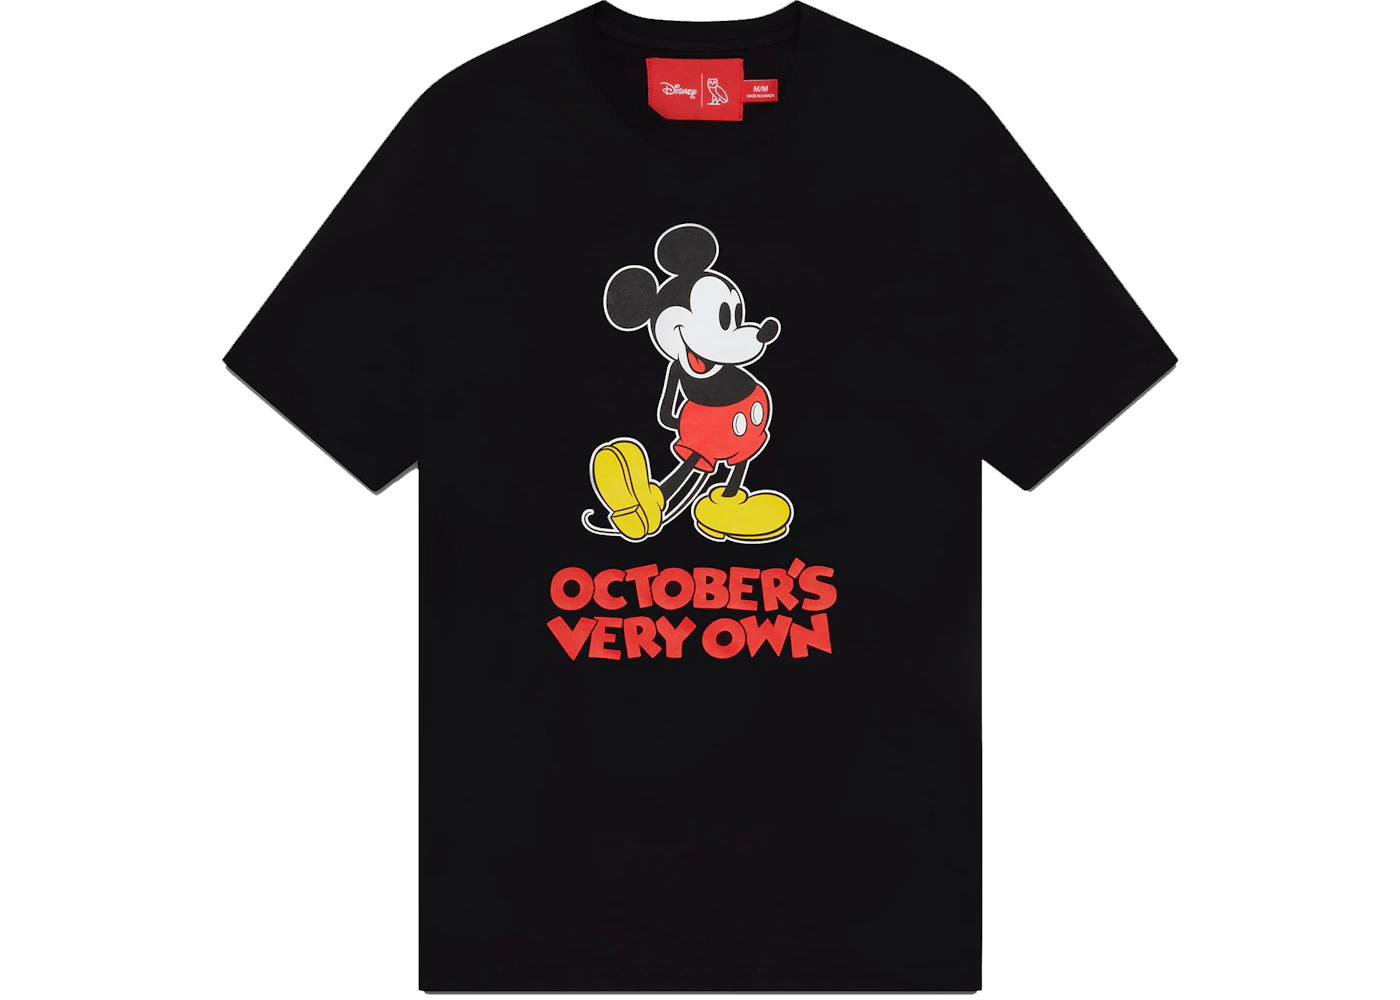 https://images.stockx.com/images/OVO-x-Disney-Classic-Mickey-T-shirt-Black.jpg?fit=fill&bg=FFFFFF&w=700&h=500&fm=webp&auto=compress&q=90&dpr=2&trim=color&updated_at=1646087658